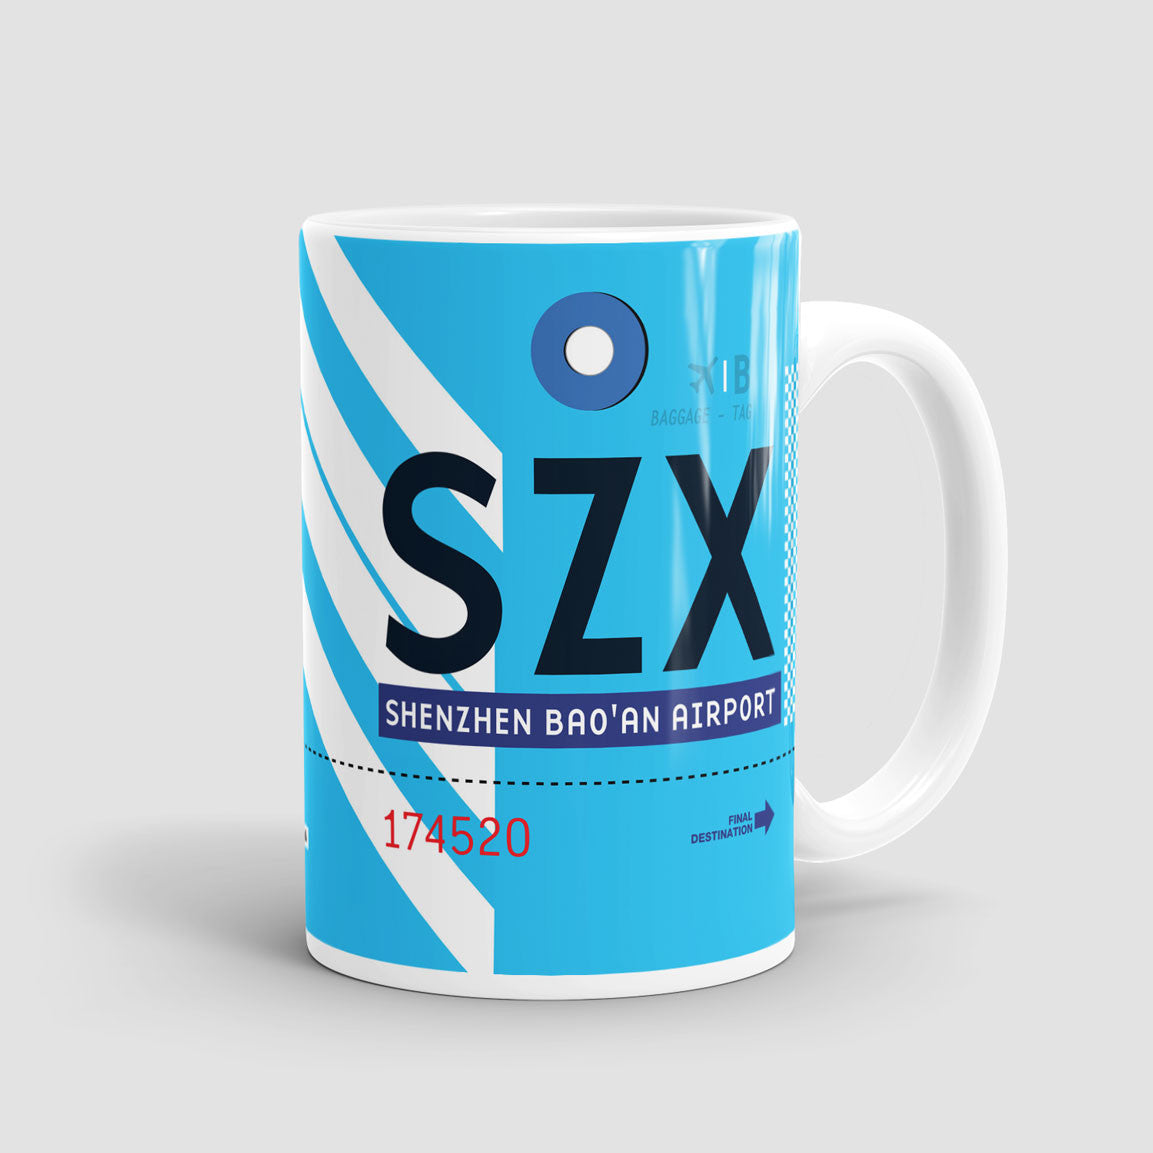 SZX - Mug - Airportag